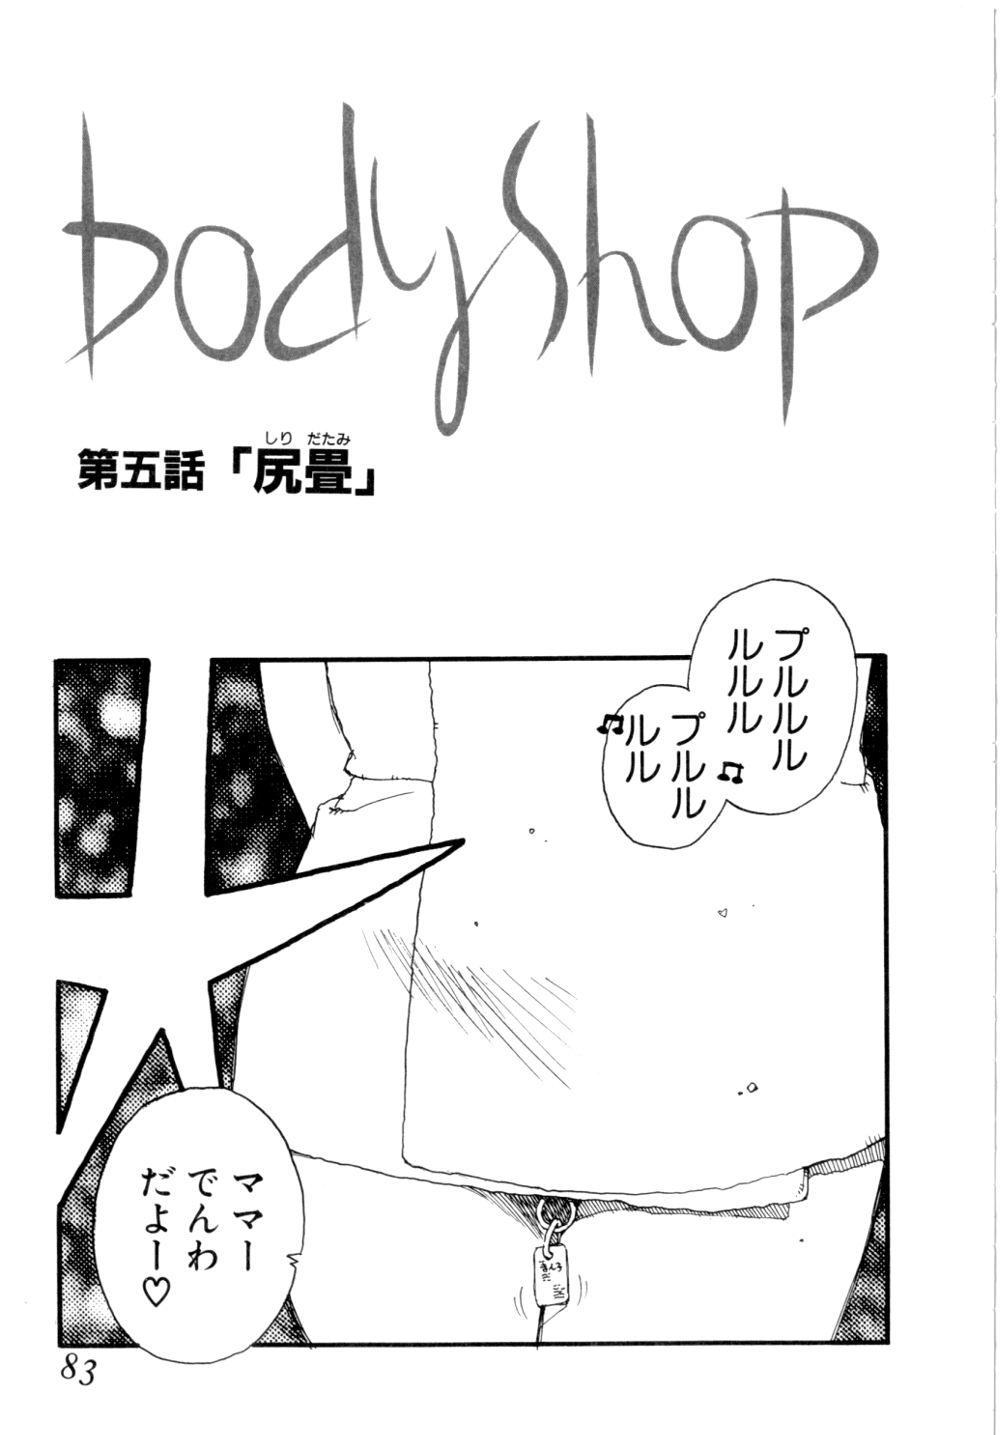 Body Shop 85